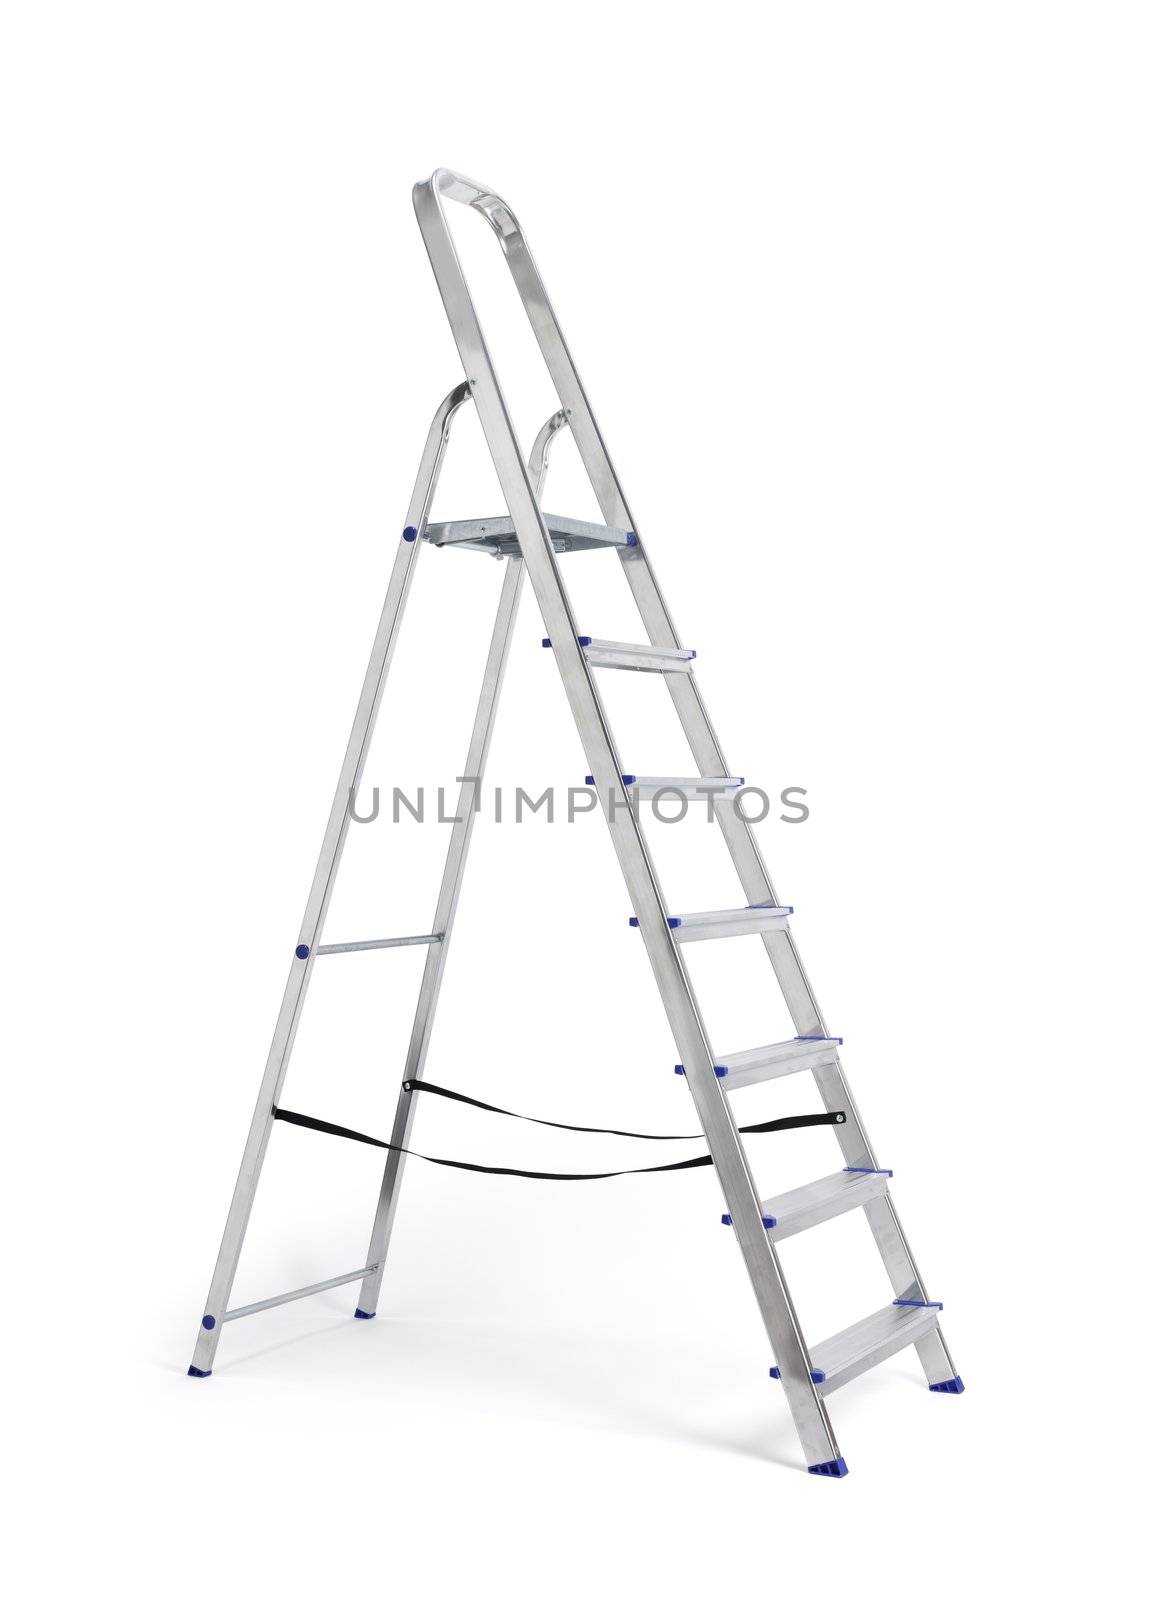 Step ladder by Stocksnapper